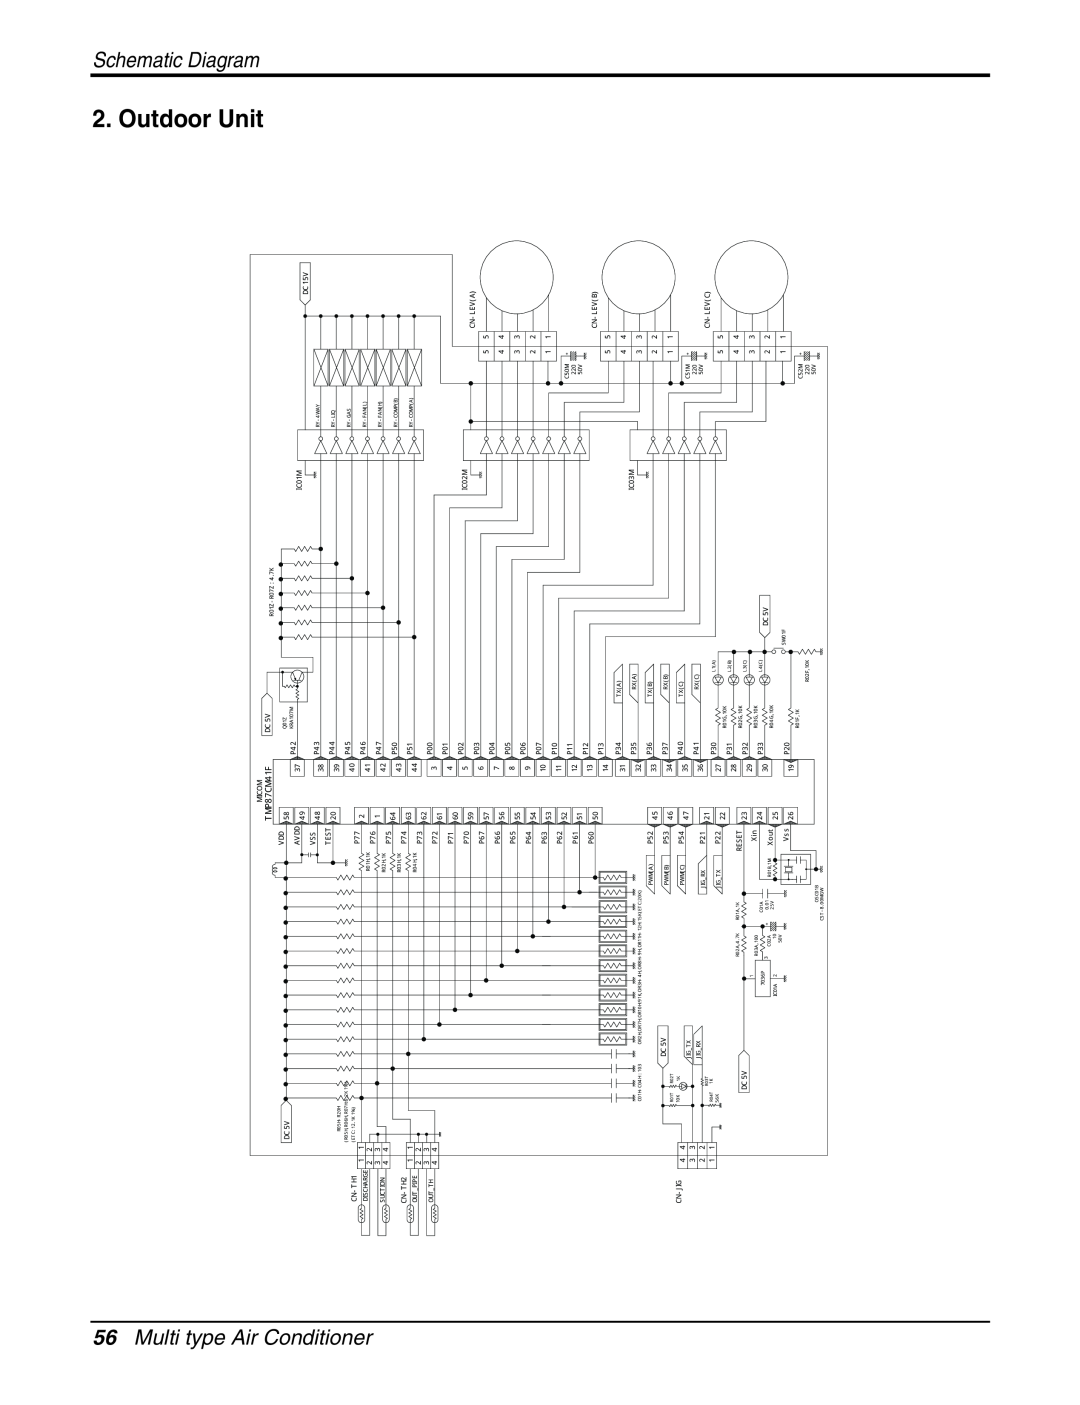 LG Electronics AMNH123APM0(LMAN120HNS) Outdoor Unit, Multi type Air Conditioner, Schematic Diagram, TMP87CM41F 